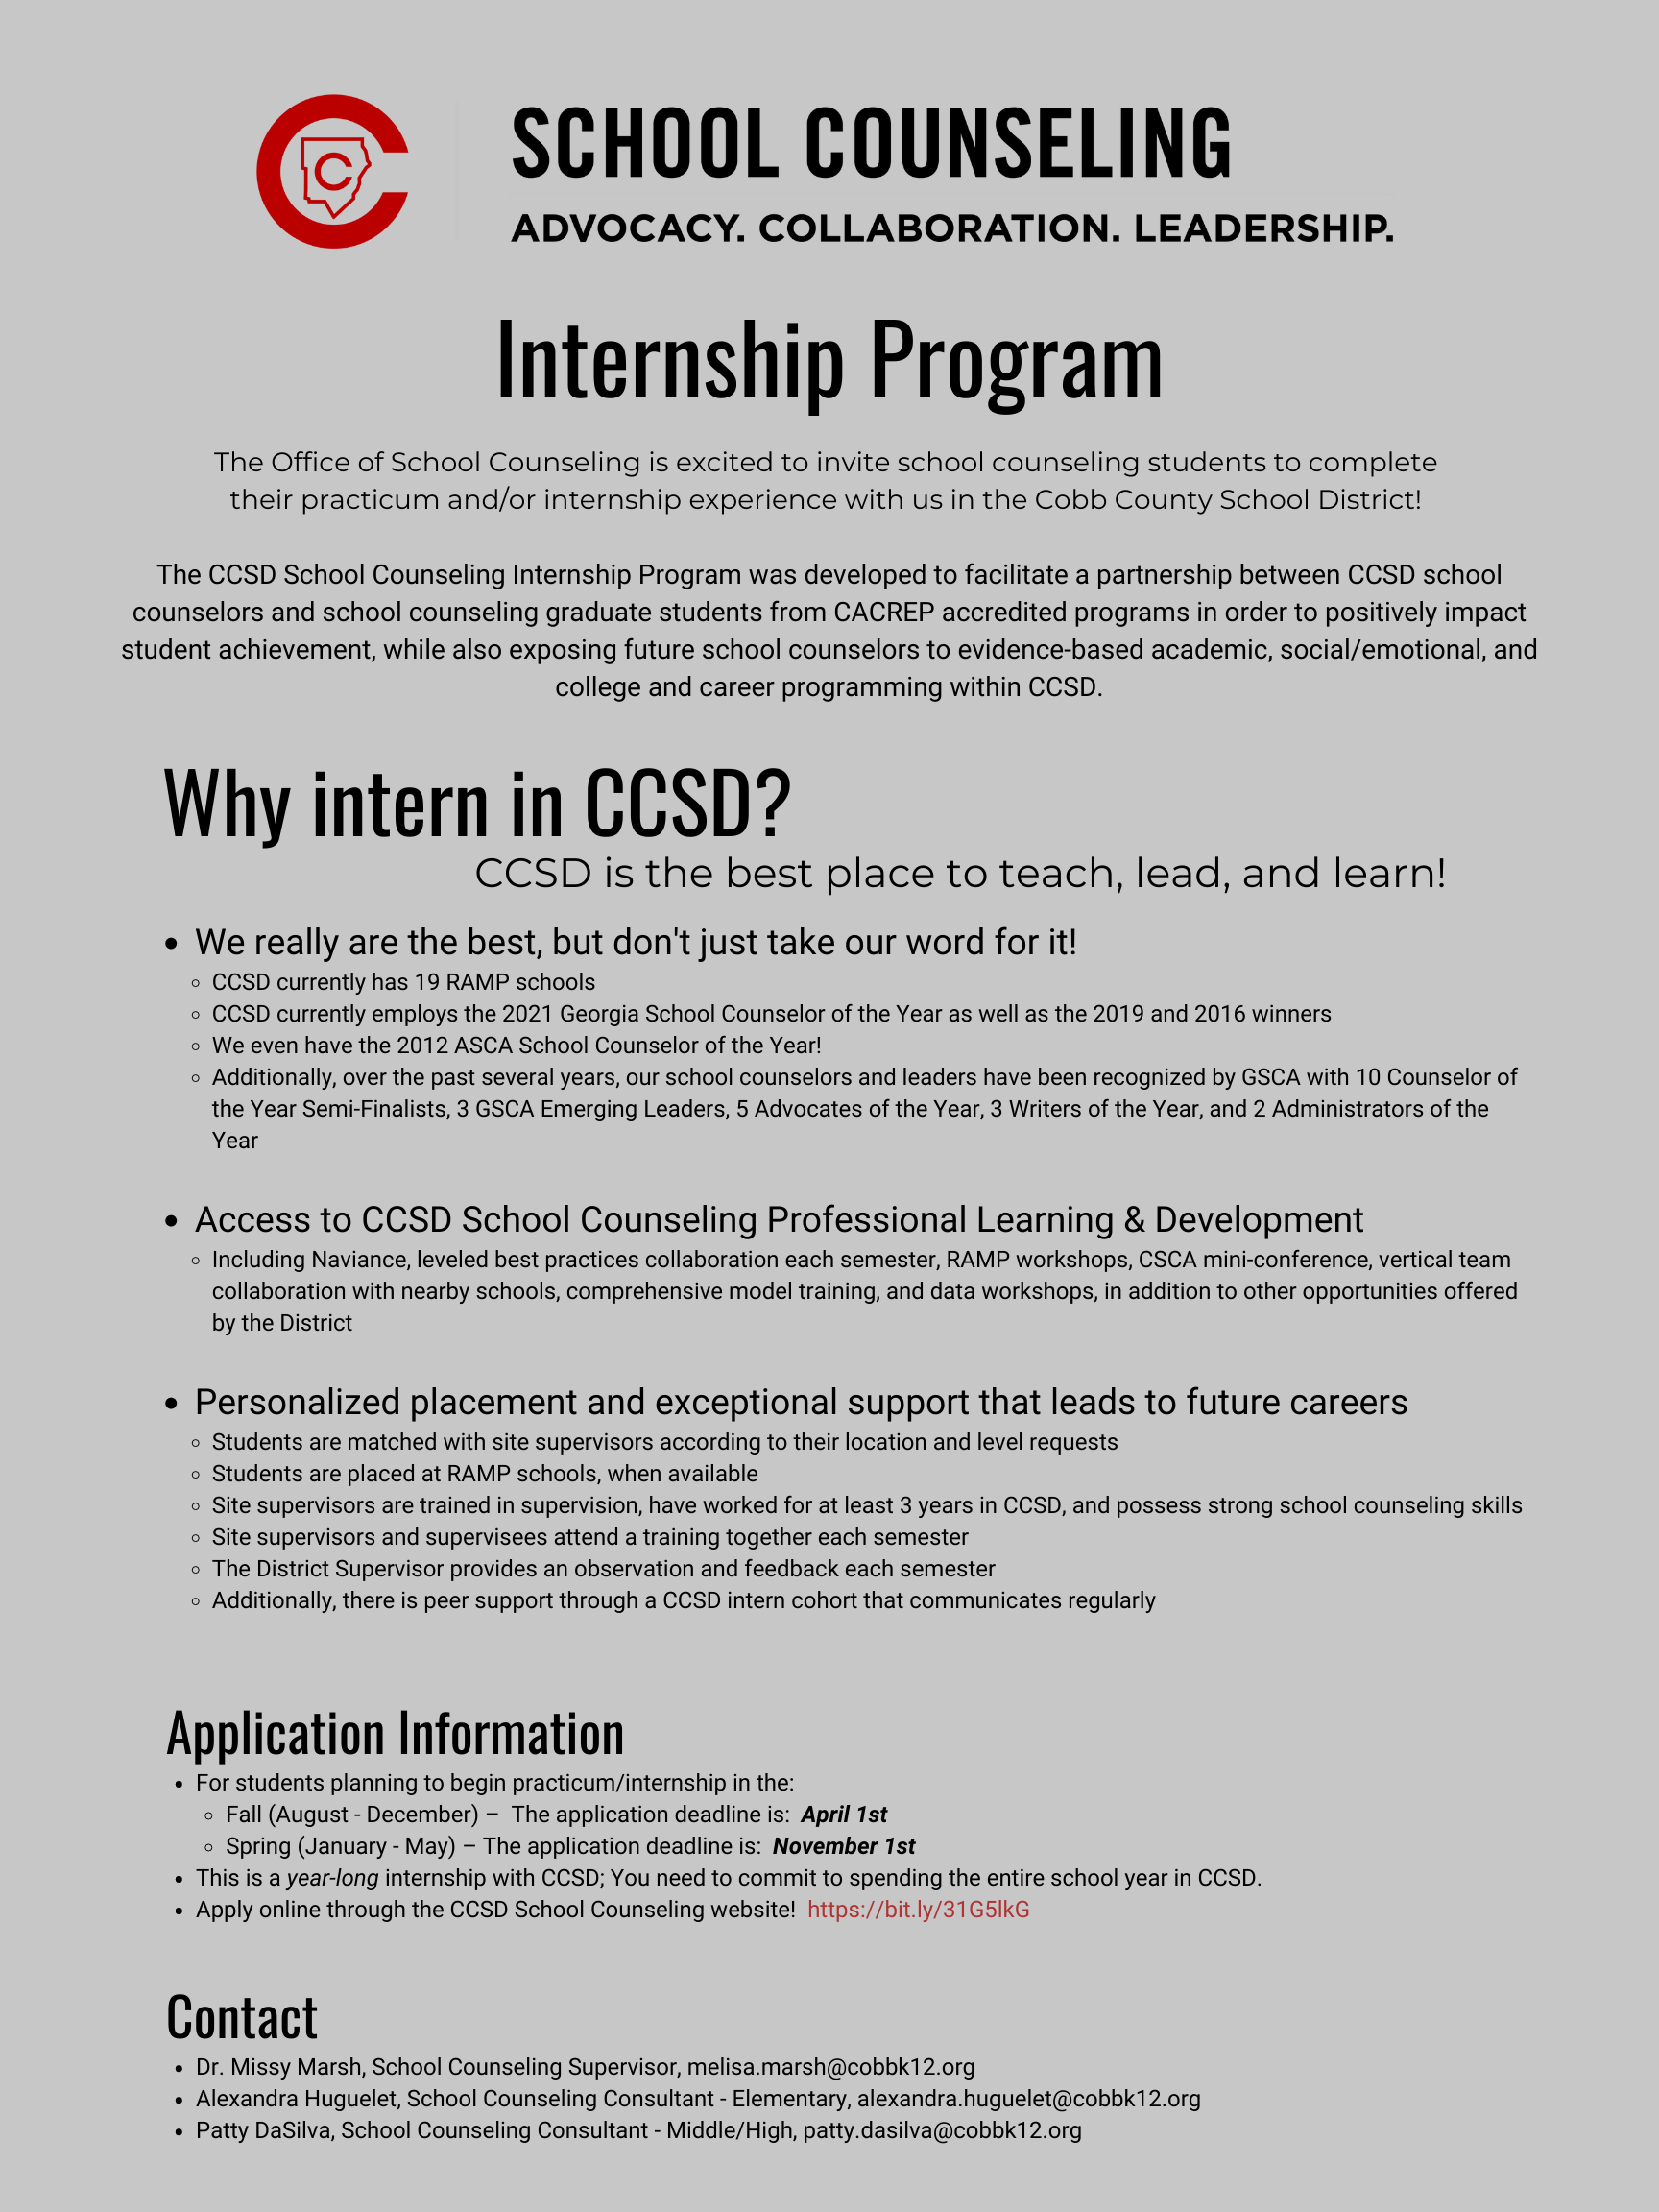 internship-program-flyer.1a287959056.png